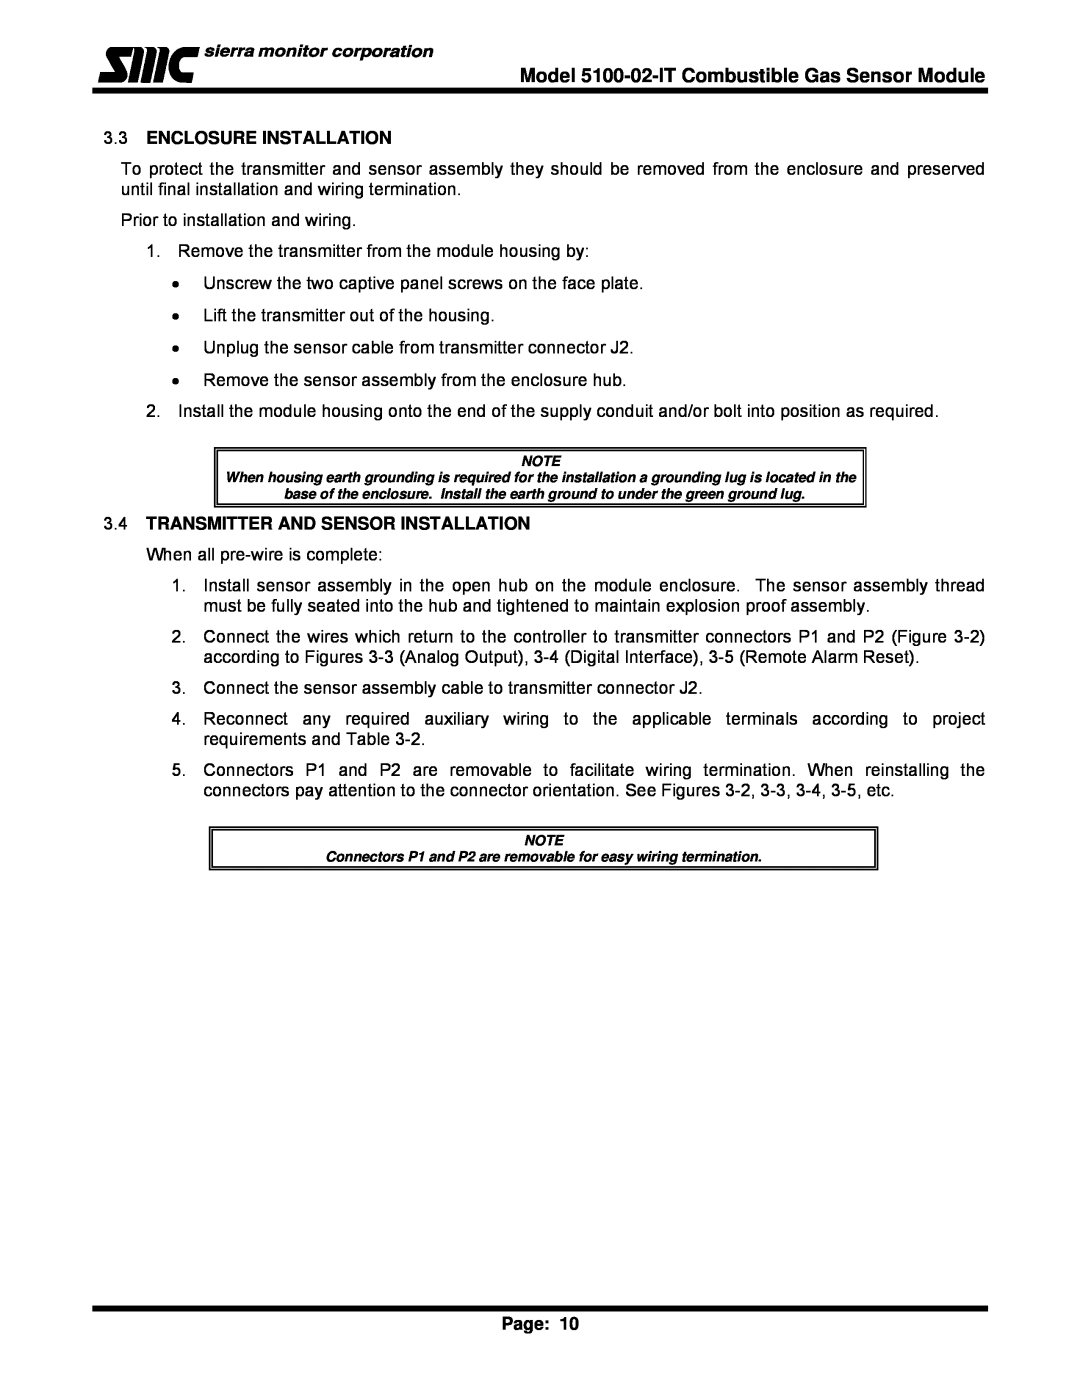 Univex IT Series instruction manual 3.3ENCLOSURE INSTALLATION, Model 5100-02-ITCombustible Gas Sensor Module, Page 